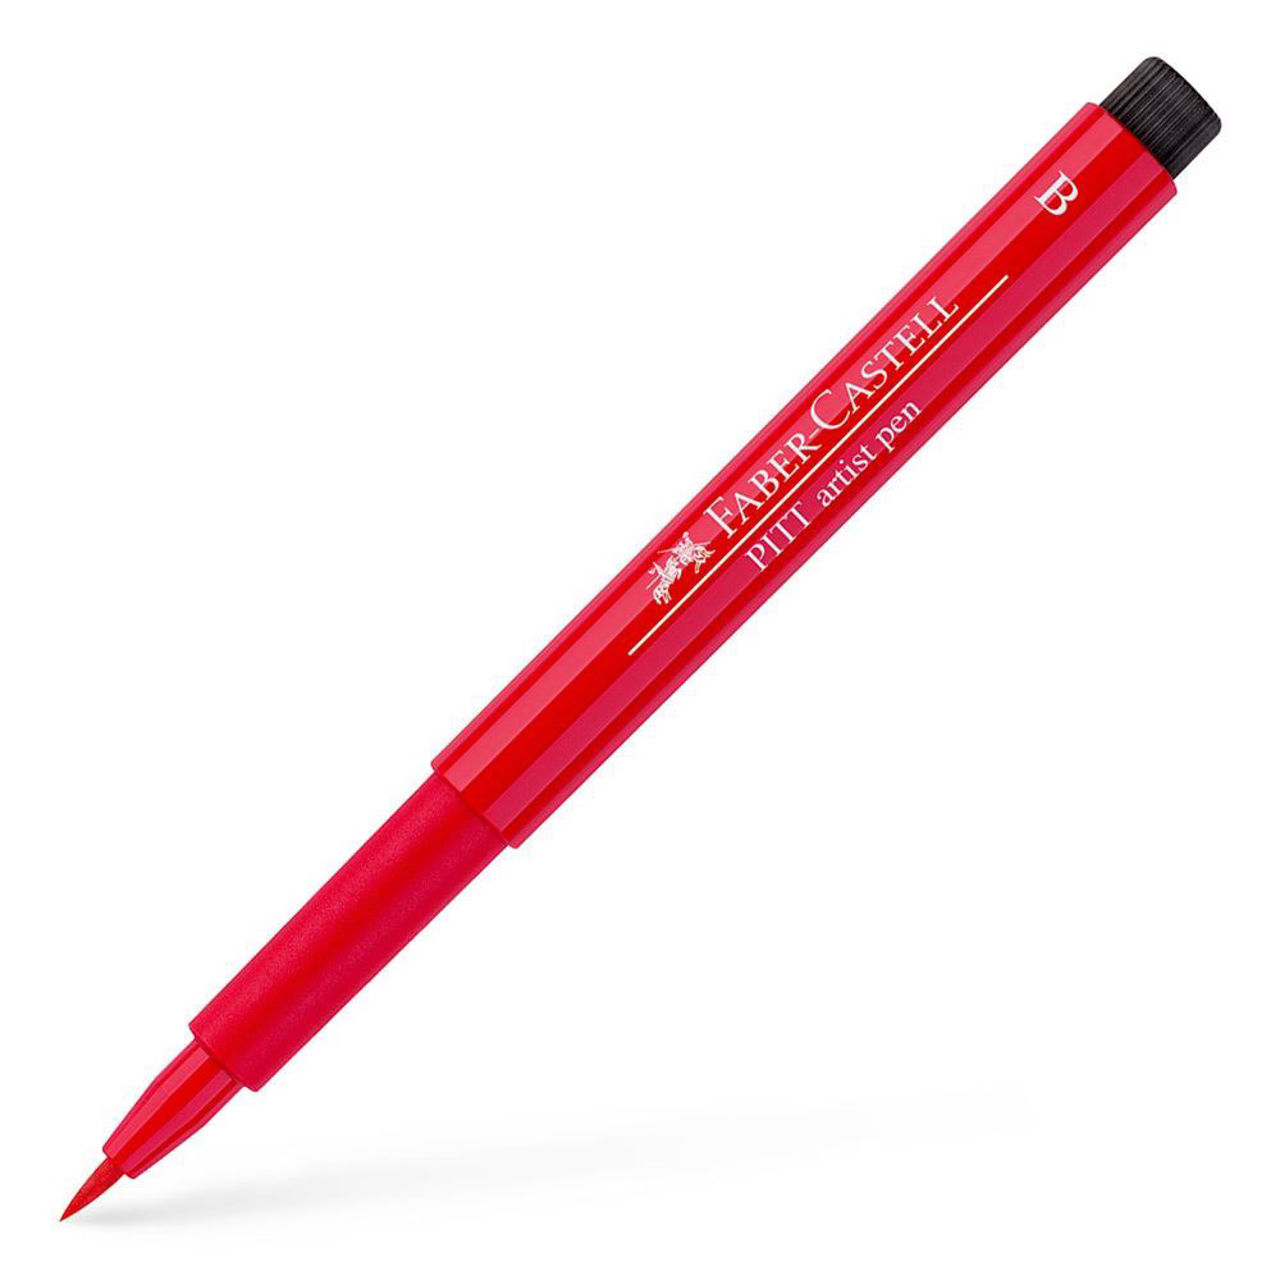 Carpediem Store. FaberCastell Pitt Big Brush Pens